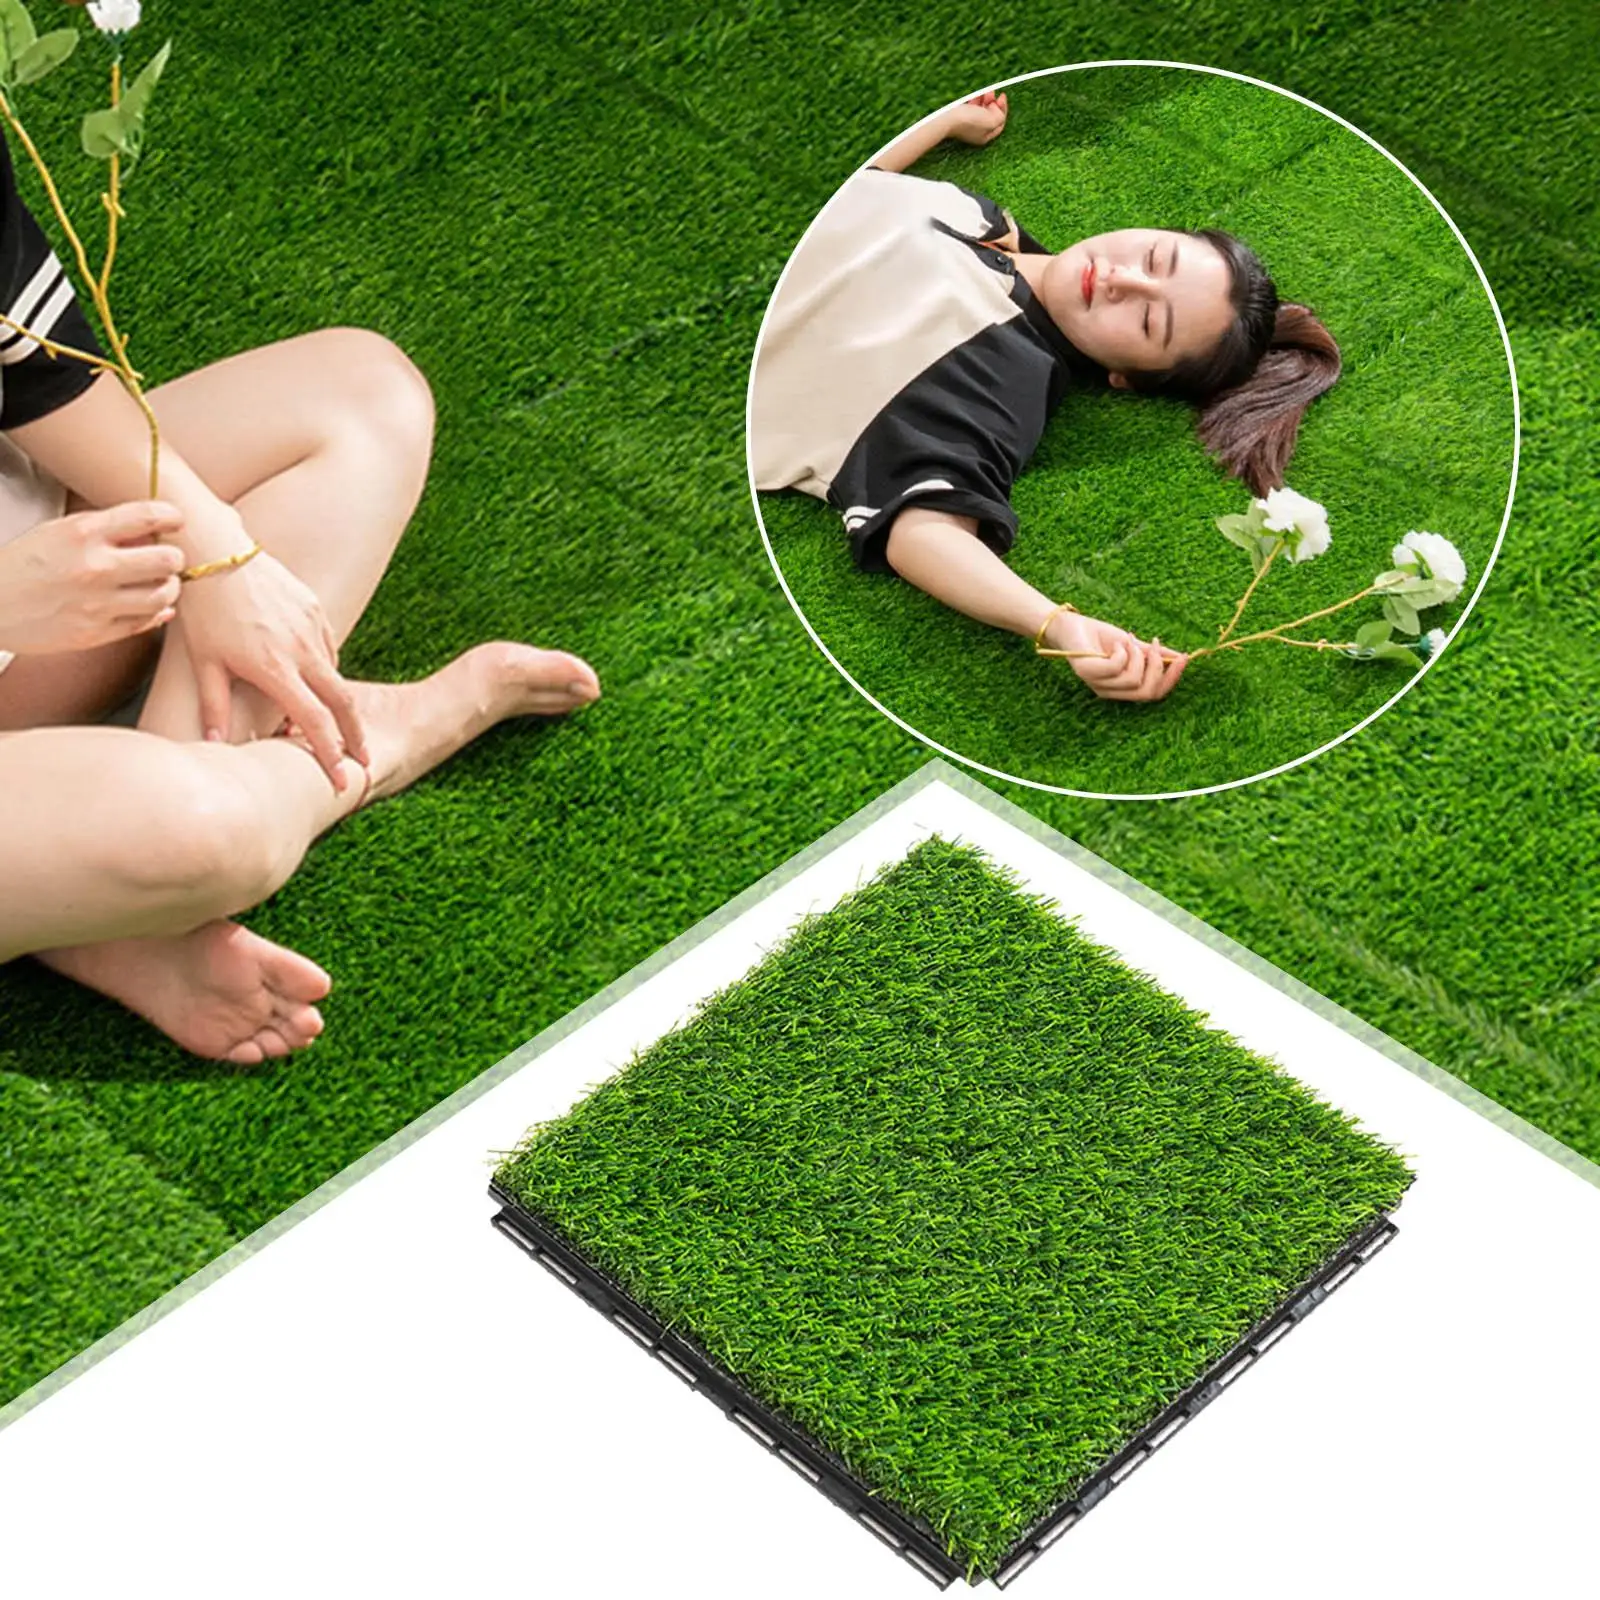 Artificial Grass Draining Floor Mat Grass Carpet Grass Turf Square Realistic for garden Lawn Outdoor Accessory